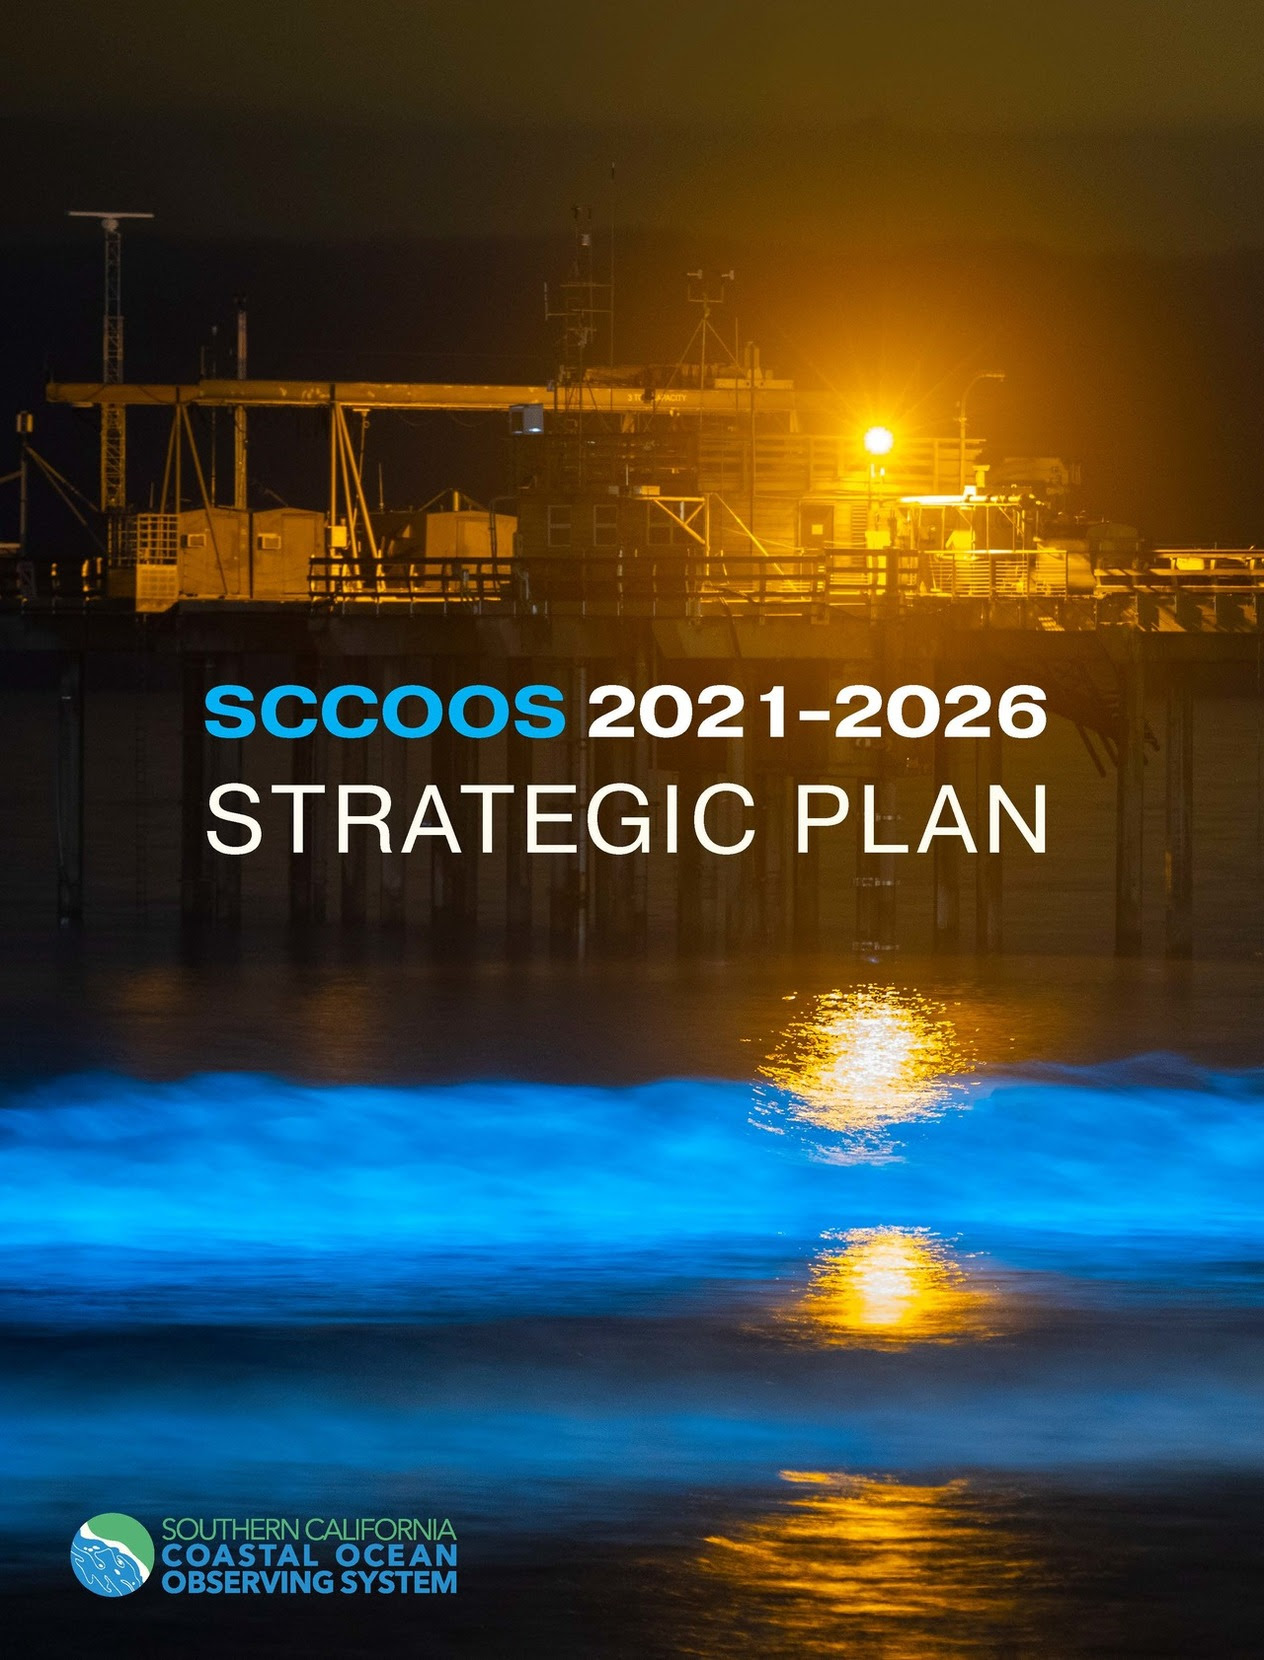 SCCOOS Releases New 2021-2026 Strategic Plan!